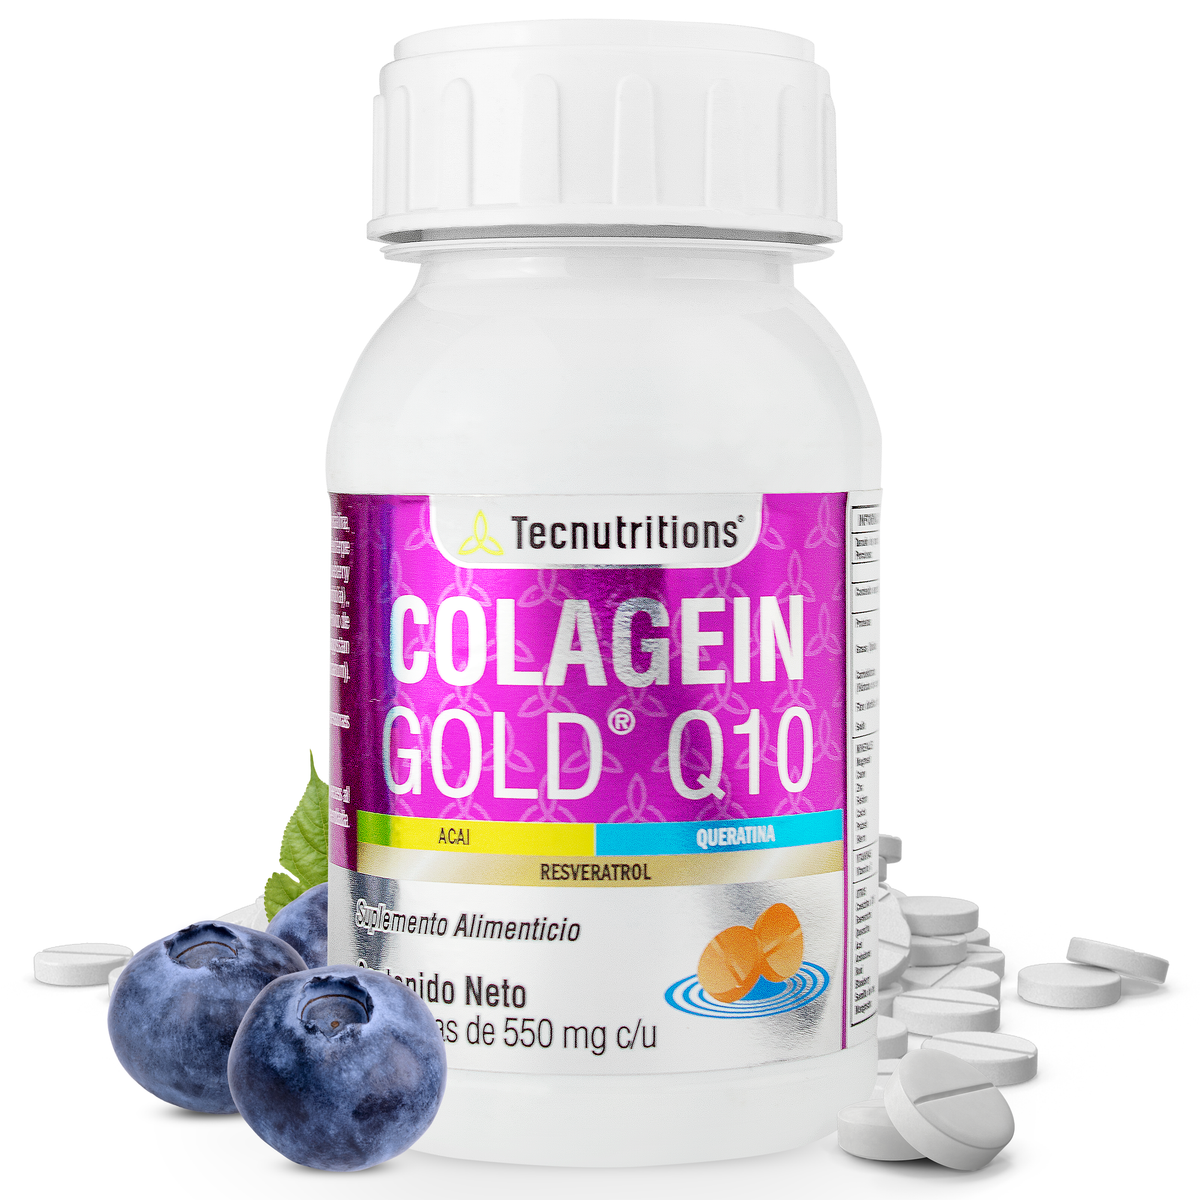 Suplemento alimenticio Colagein Gold Q10, 60 tabs, con colágeno hidrolizado, Q10, queratina